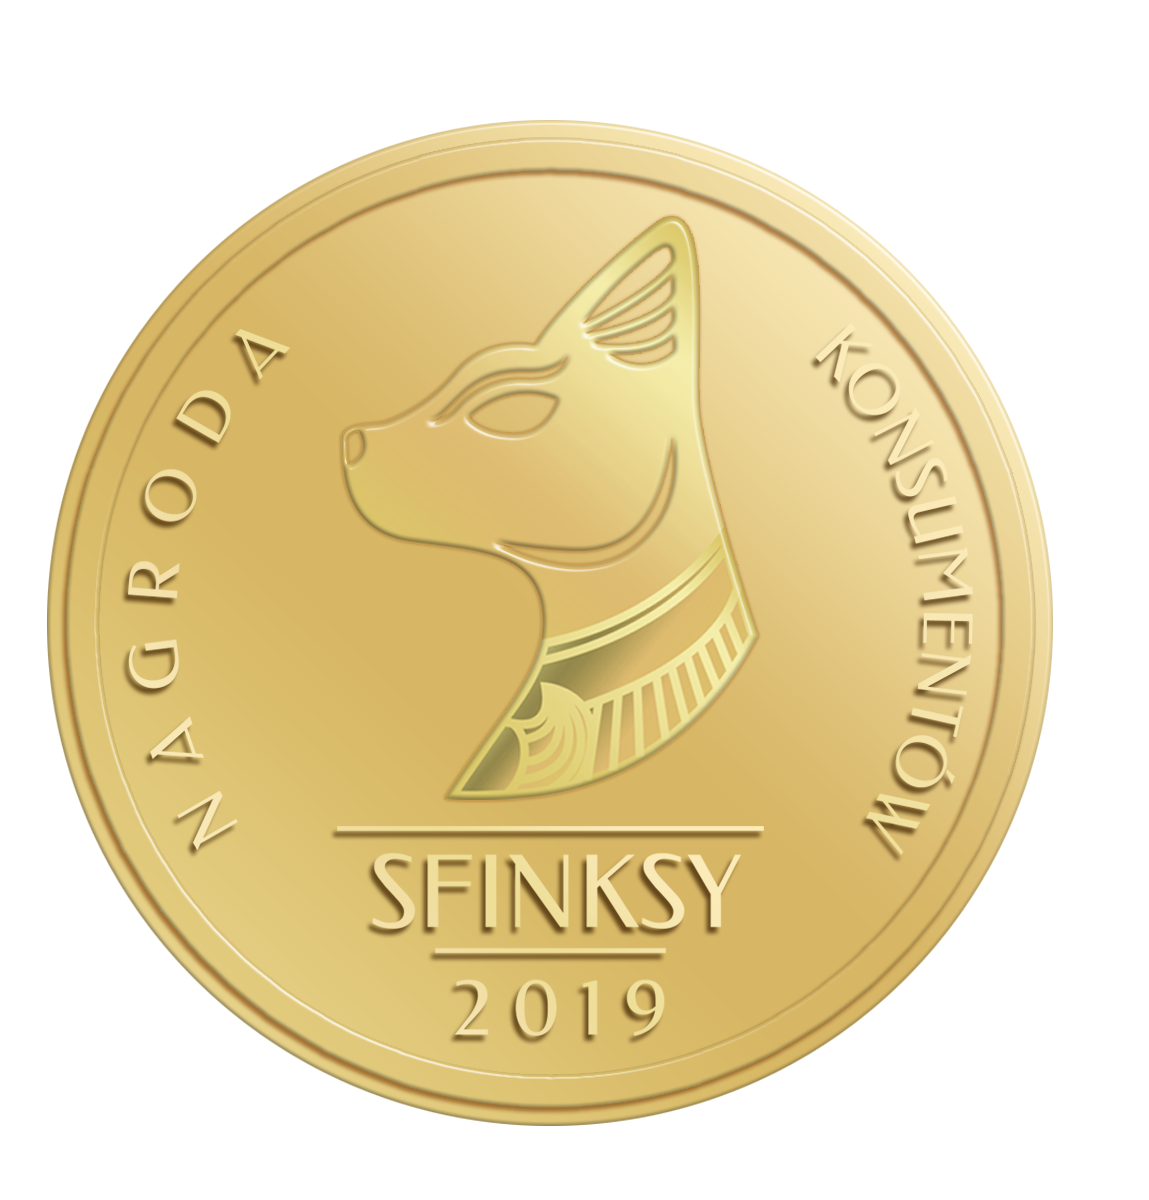 Sfinksy-2019-zloto-nagroda-konsumentow-2(2).png